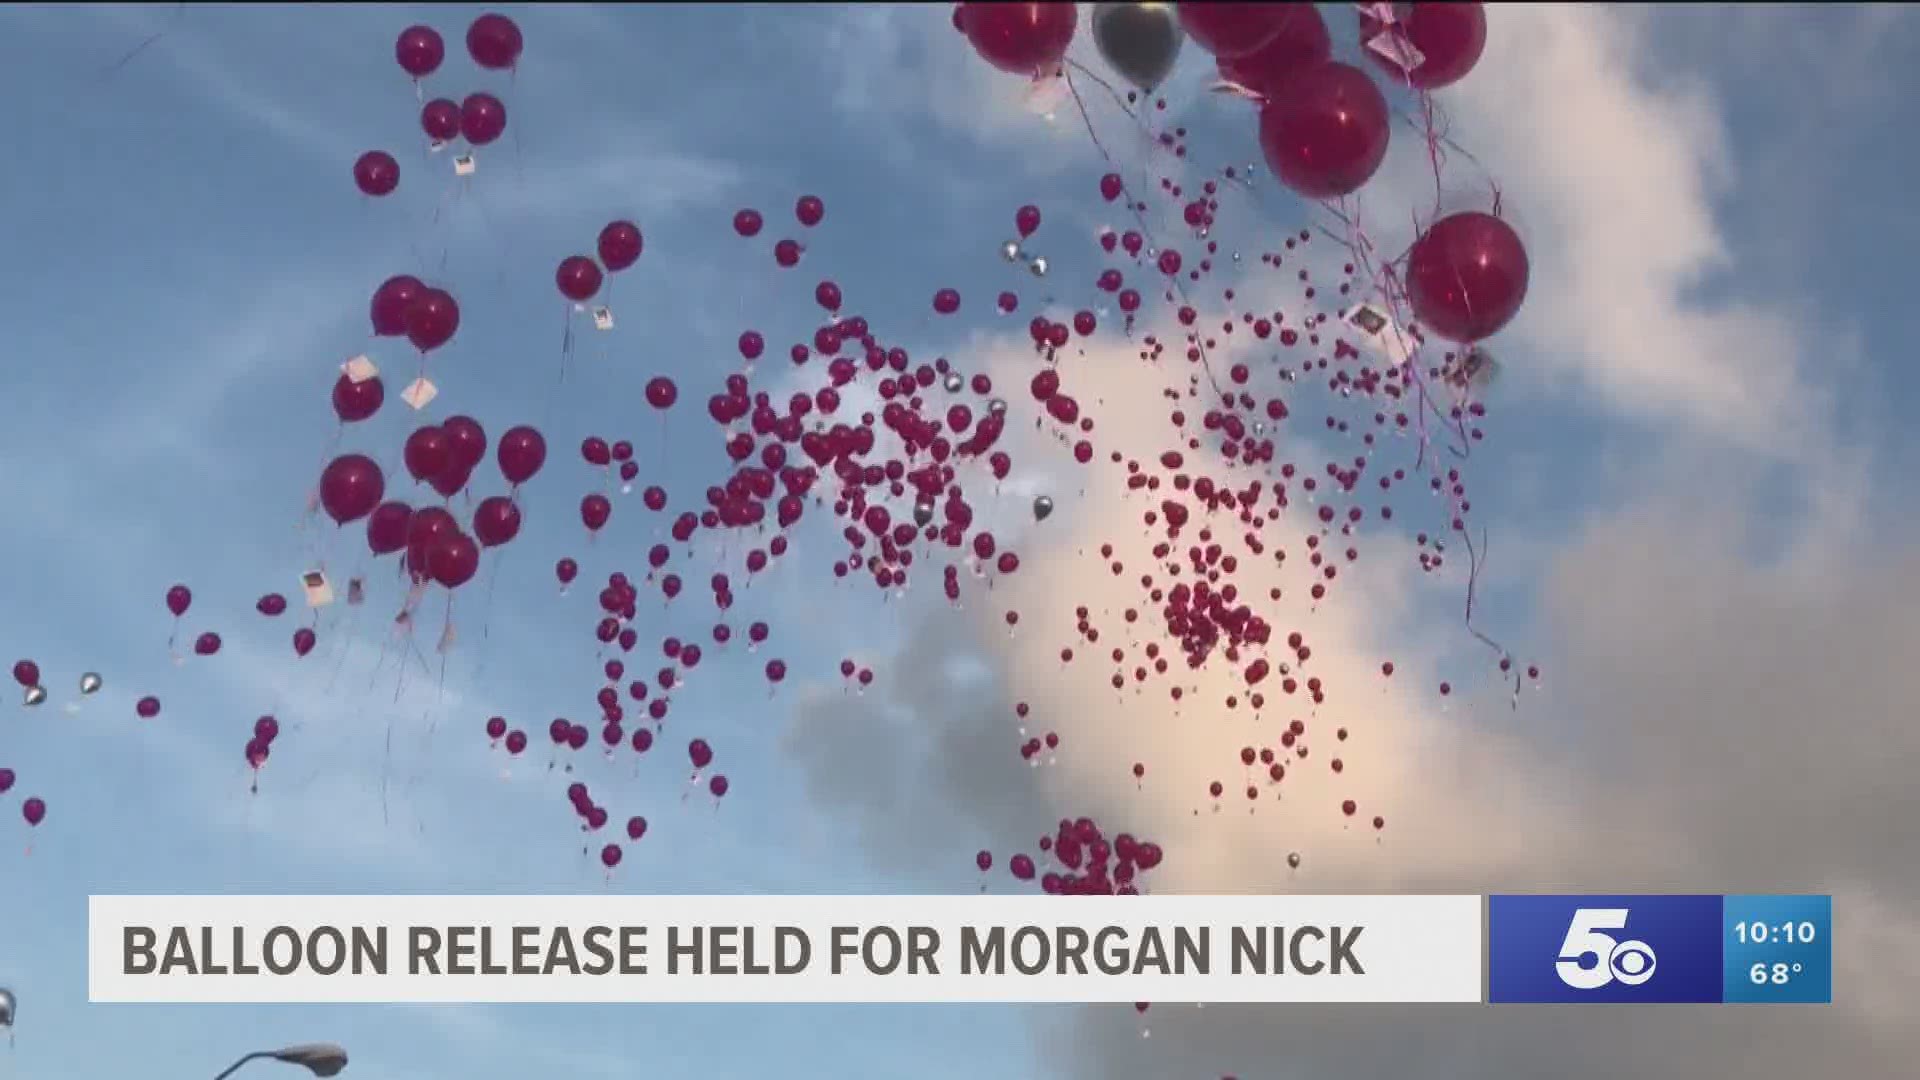 Balloon release held for Morgan Nick.